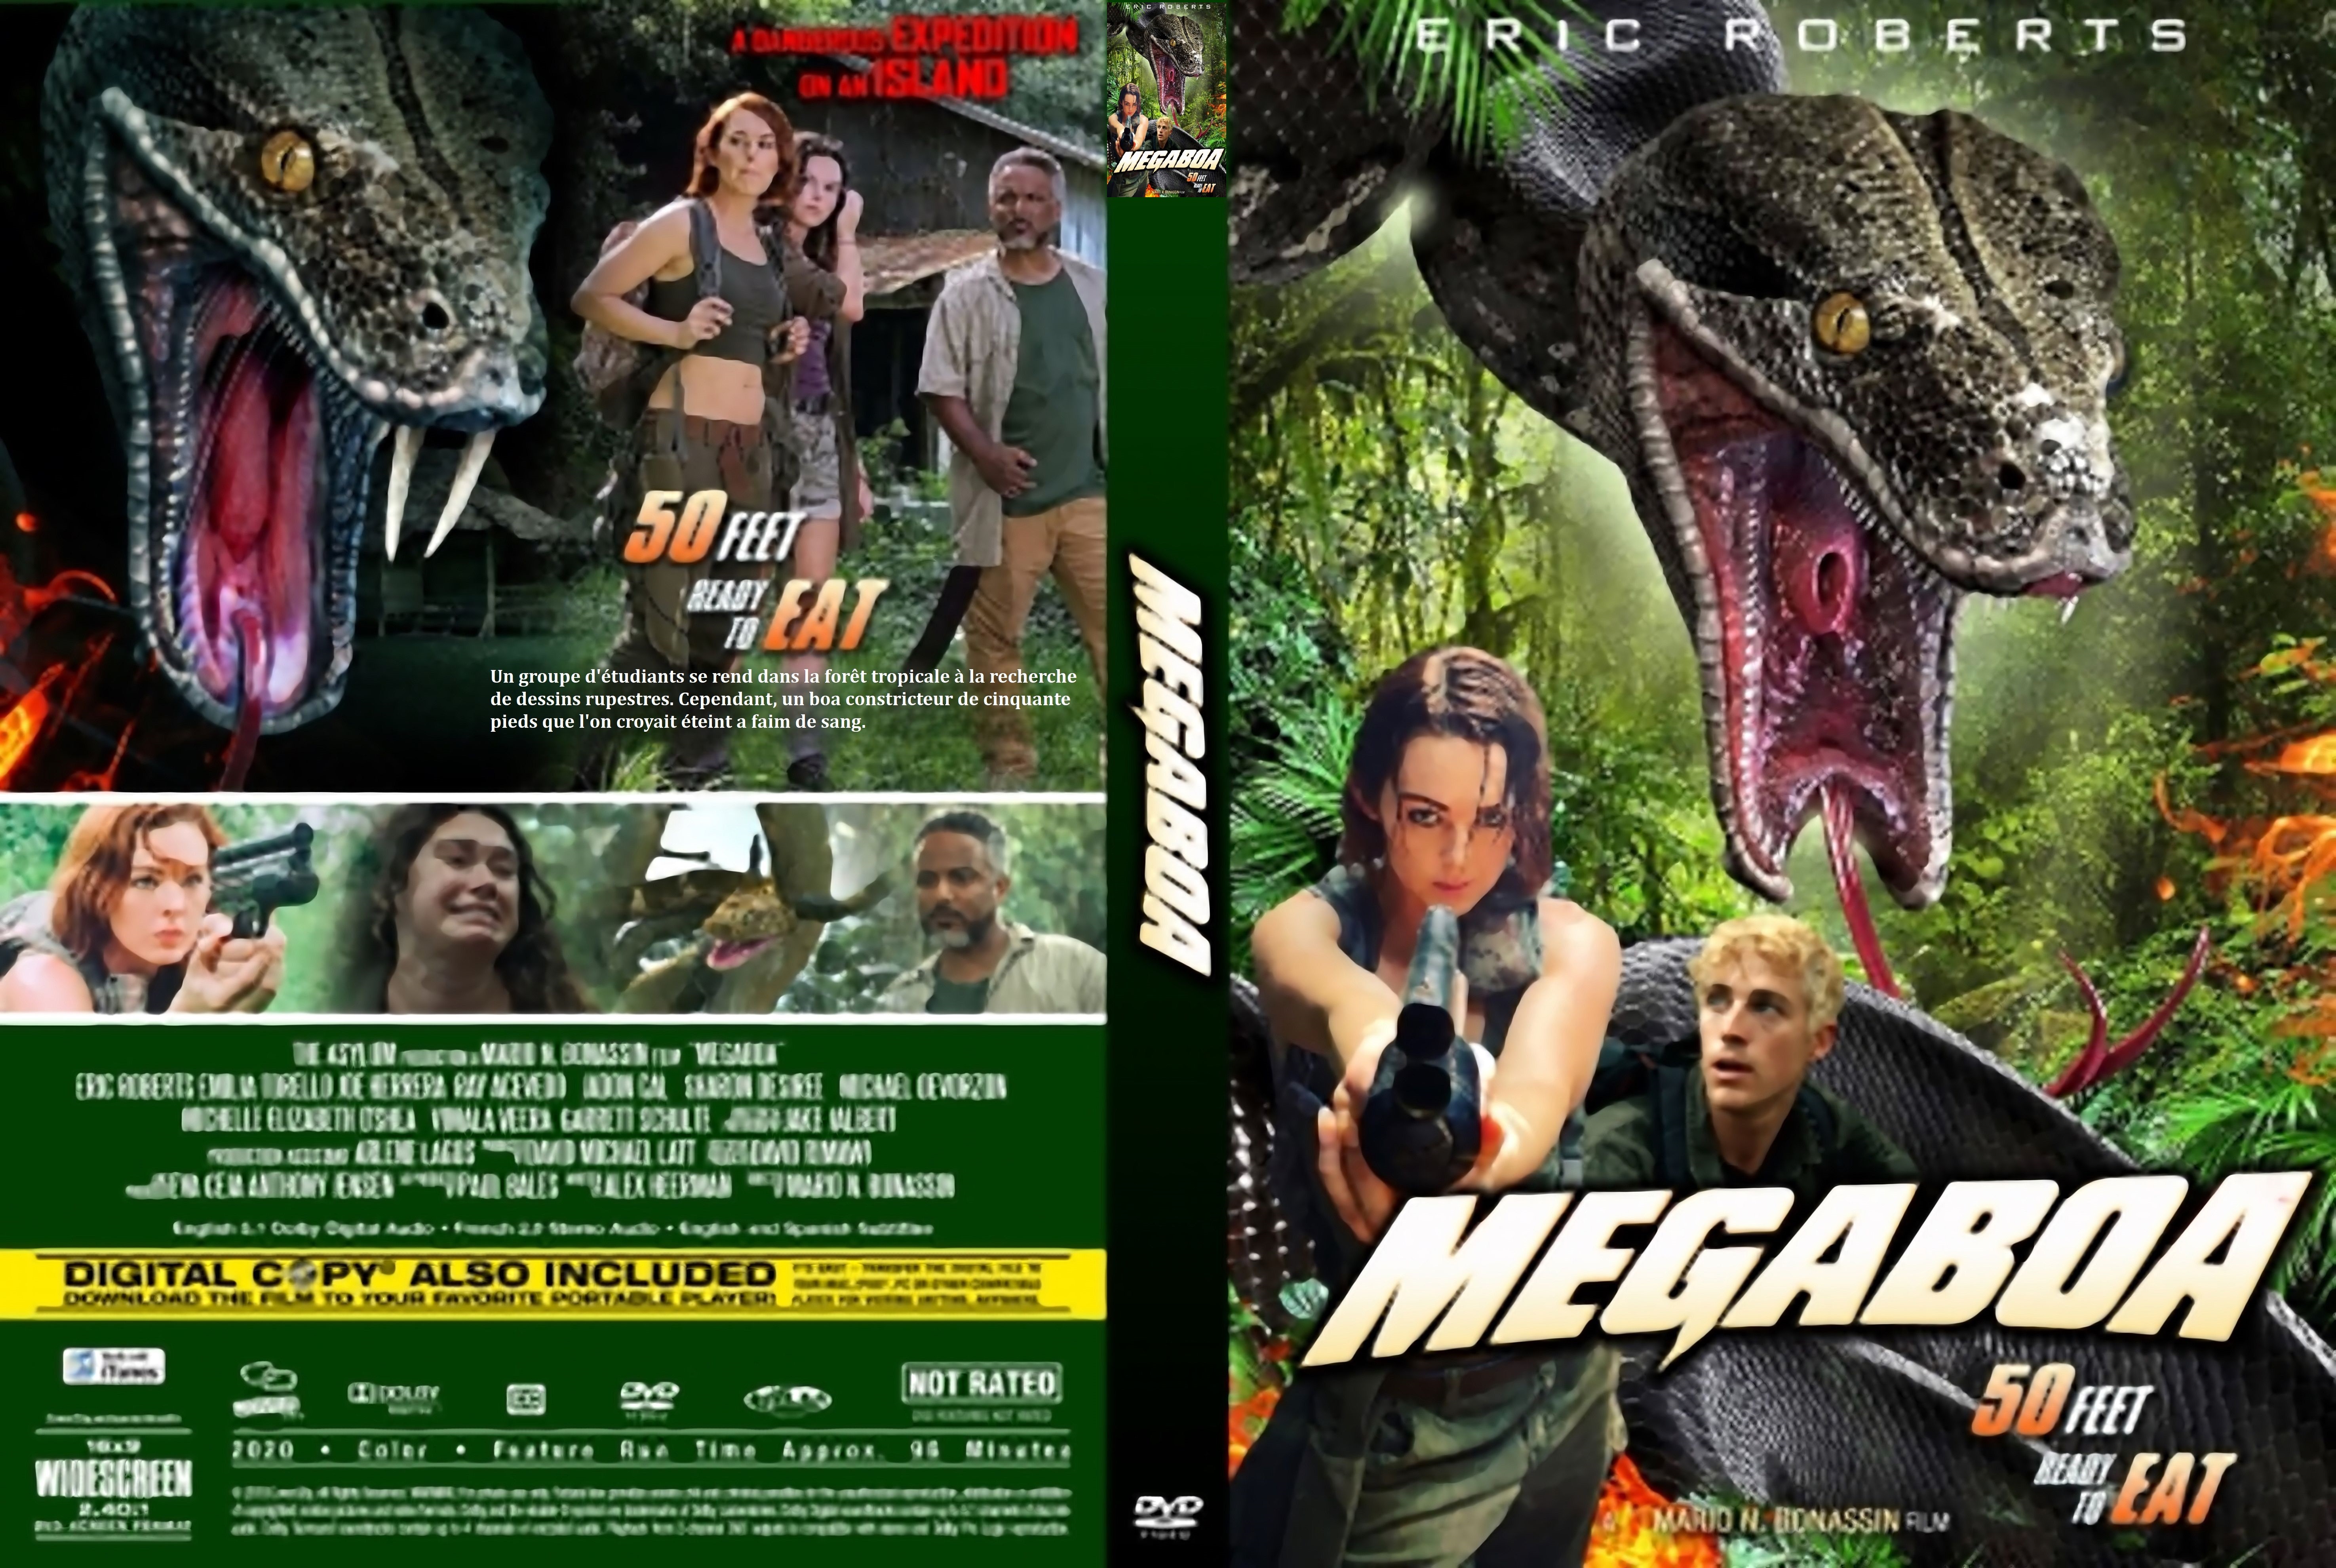 Jaquette DVD Megaboa custom